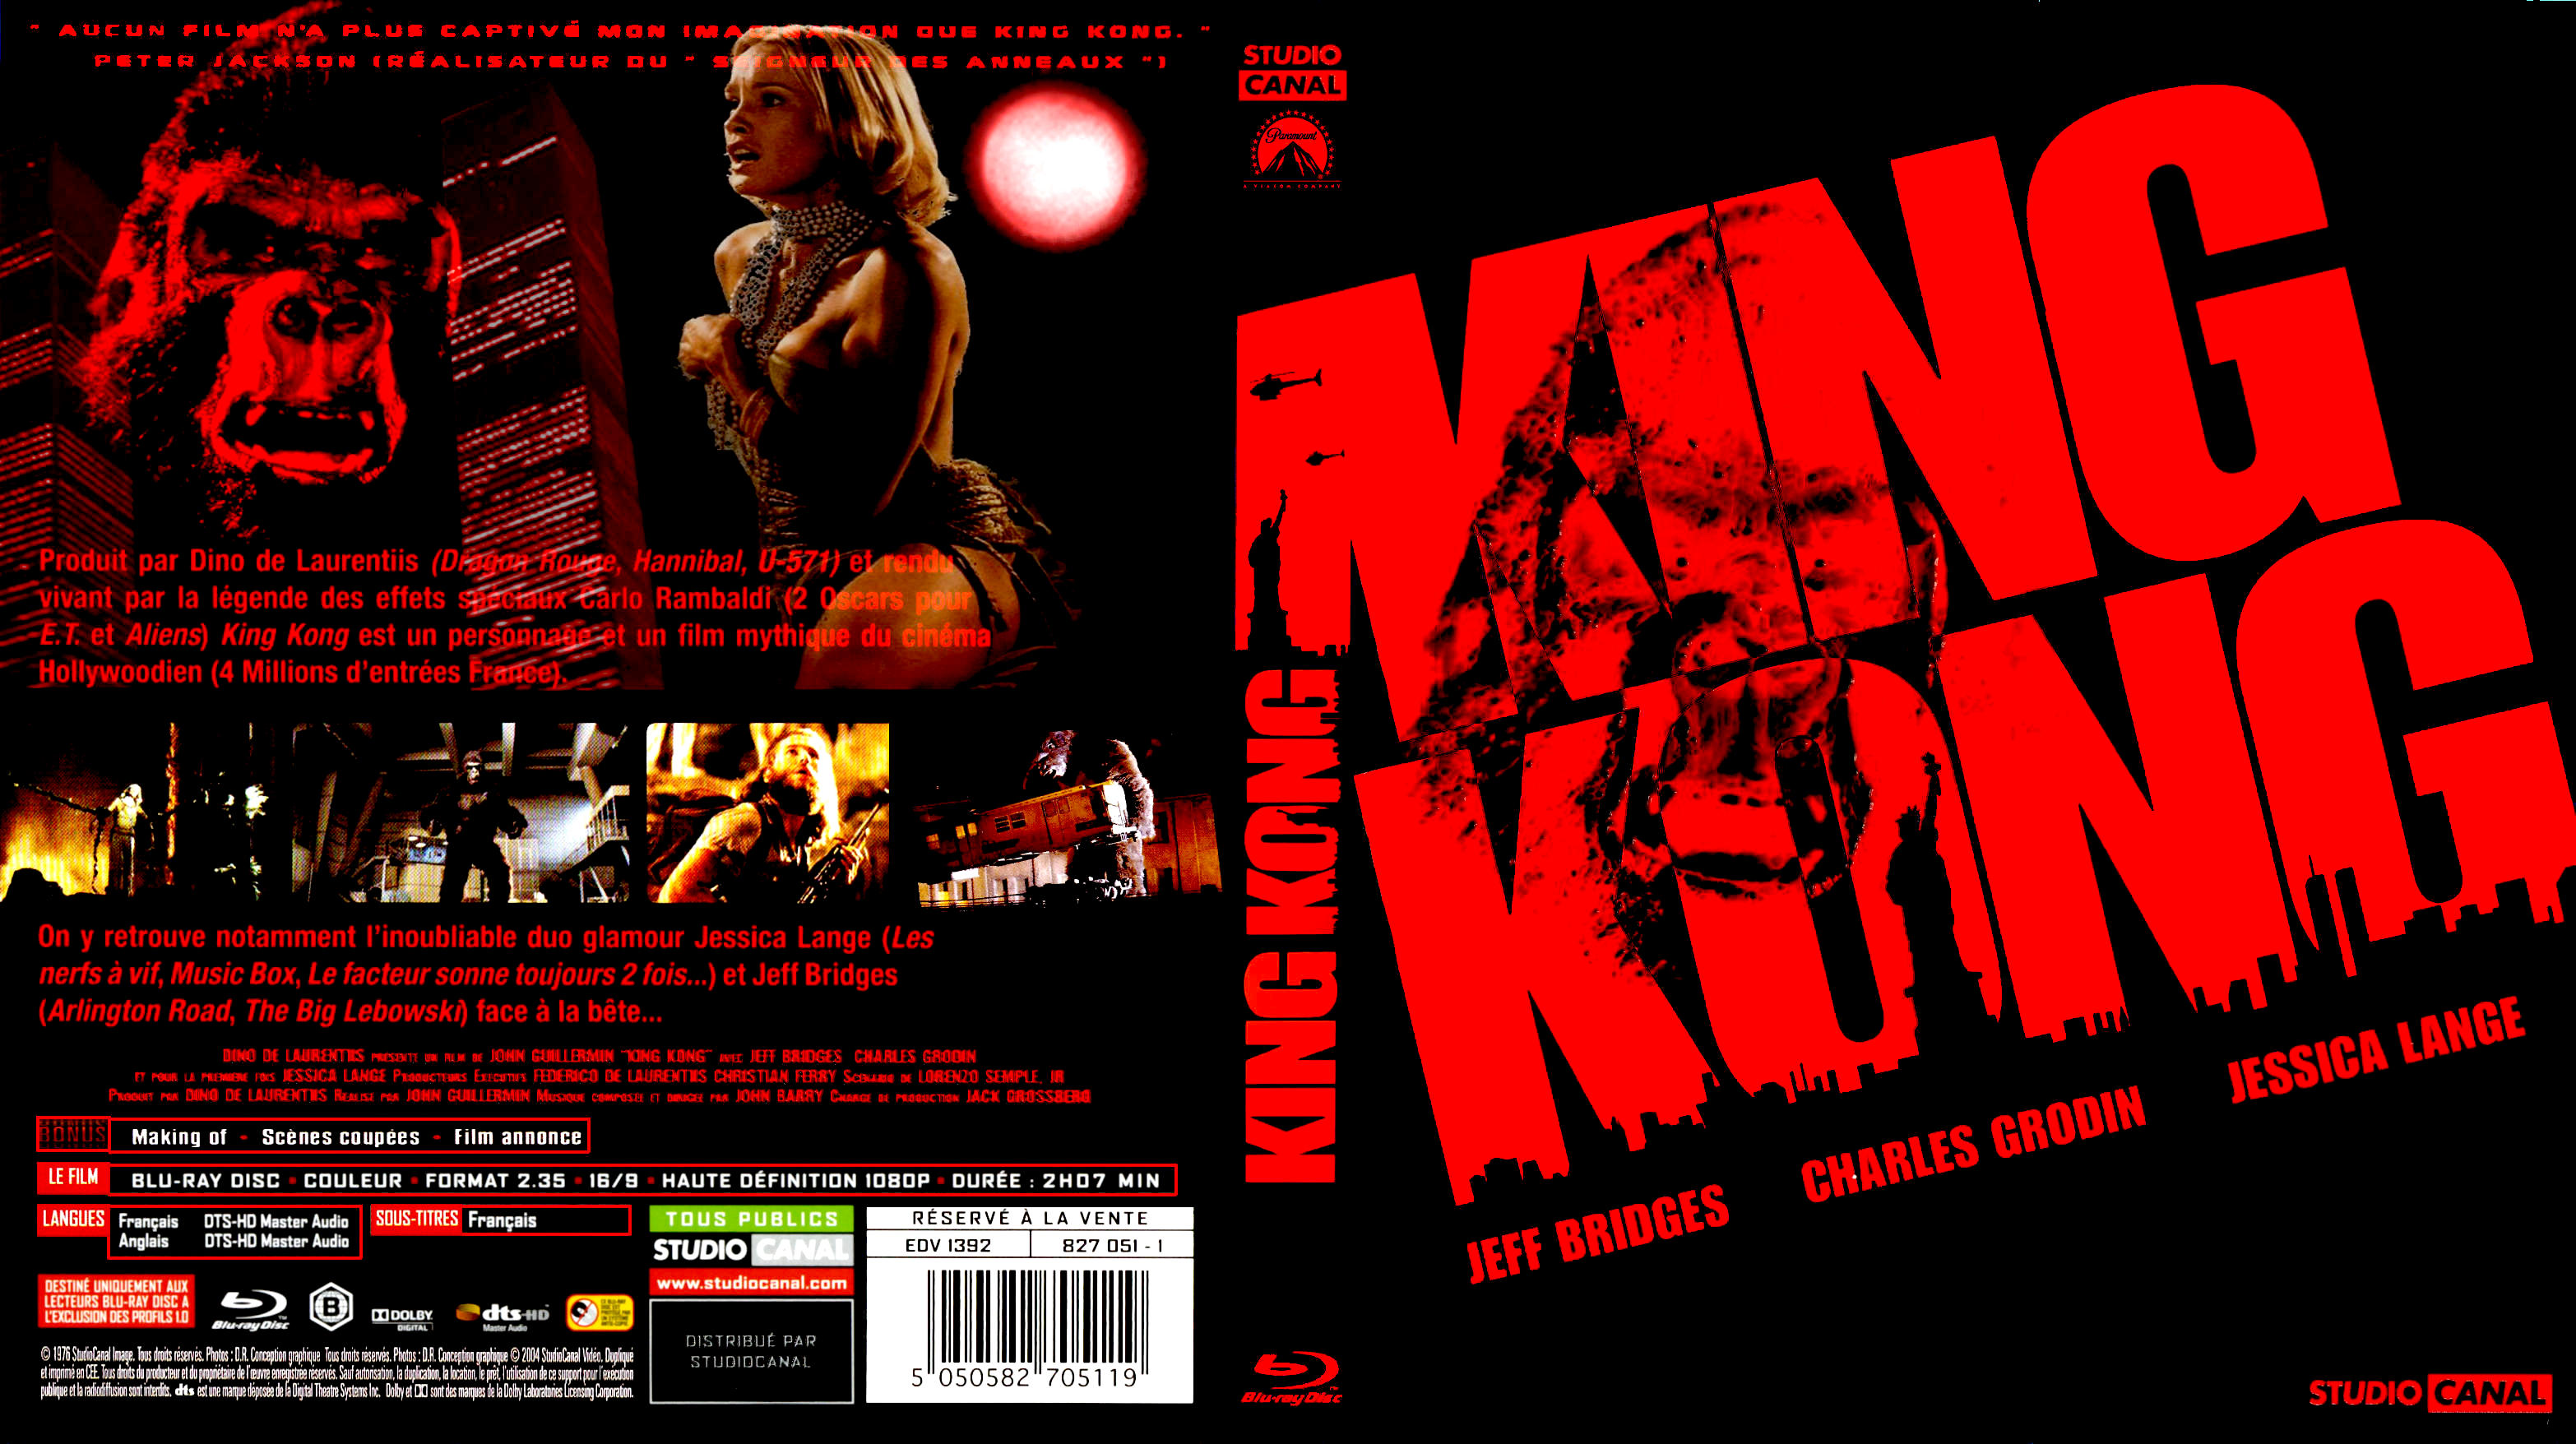 Jaquette DVD King kong (1976) custom (BLU-RAY)